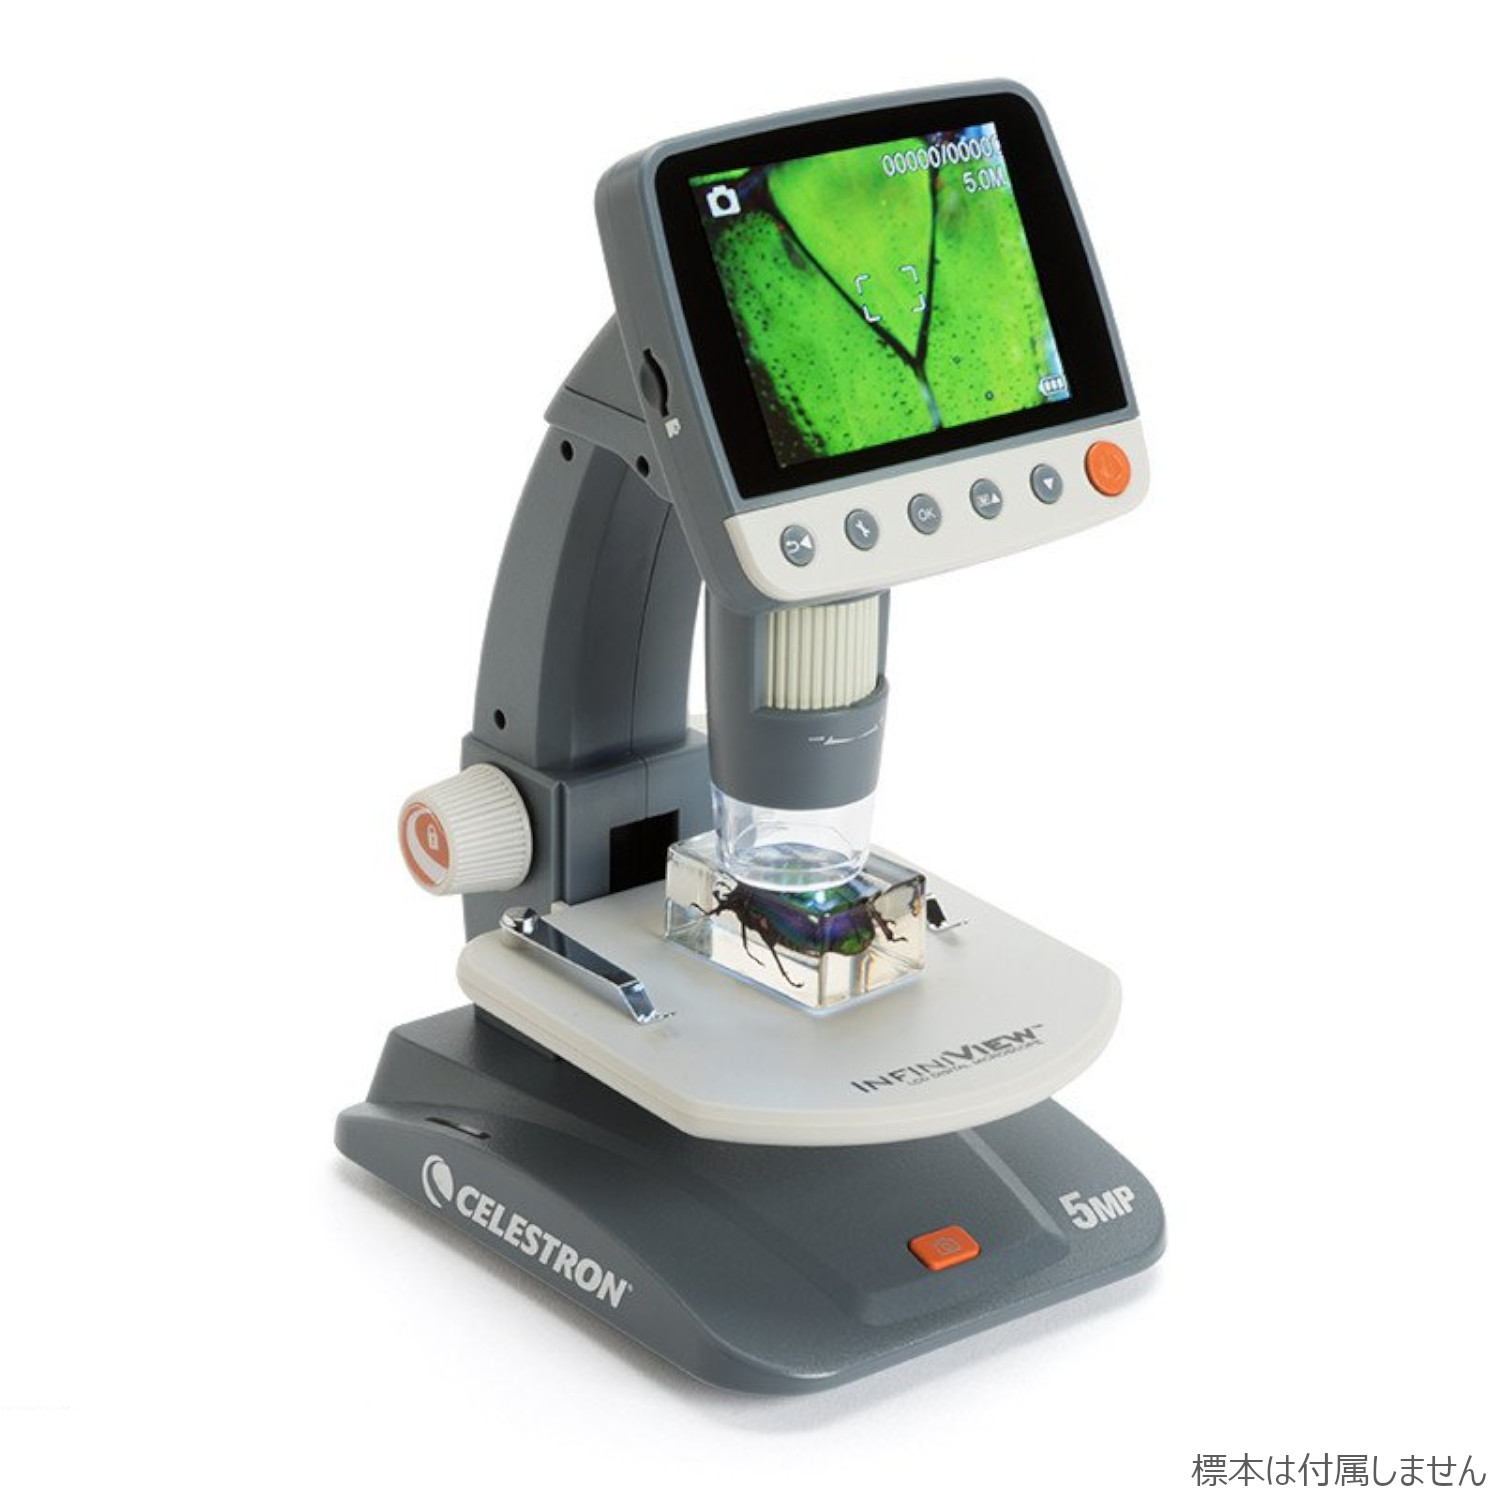 CELESTRON 顕微鏡 InfiniView LCD デジタル顕微鏡